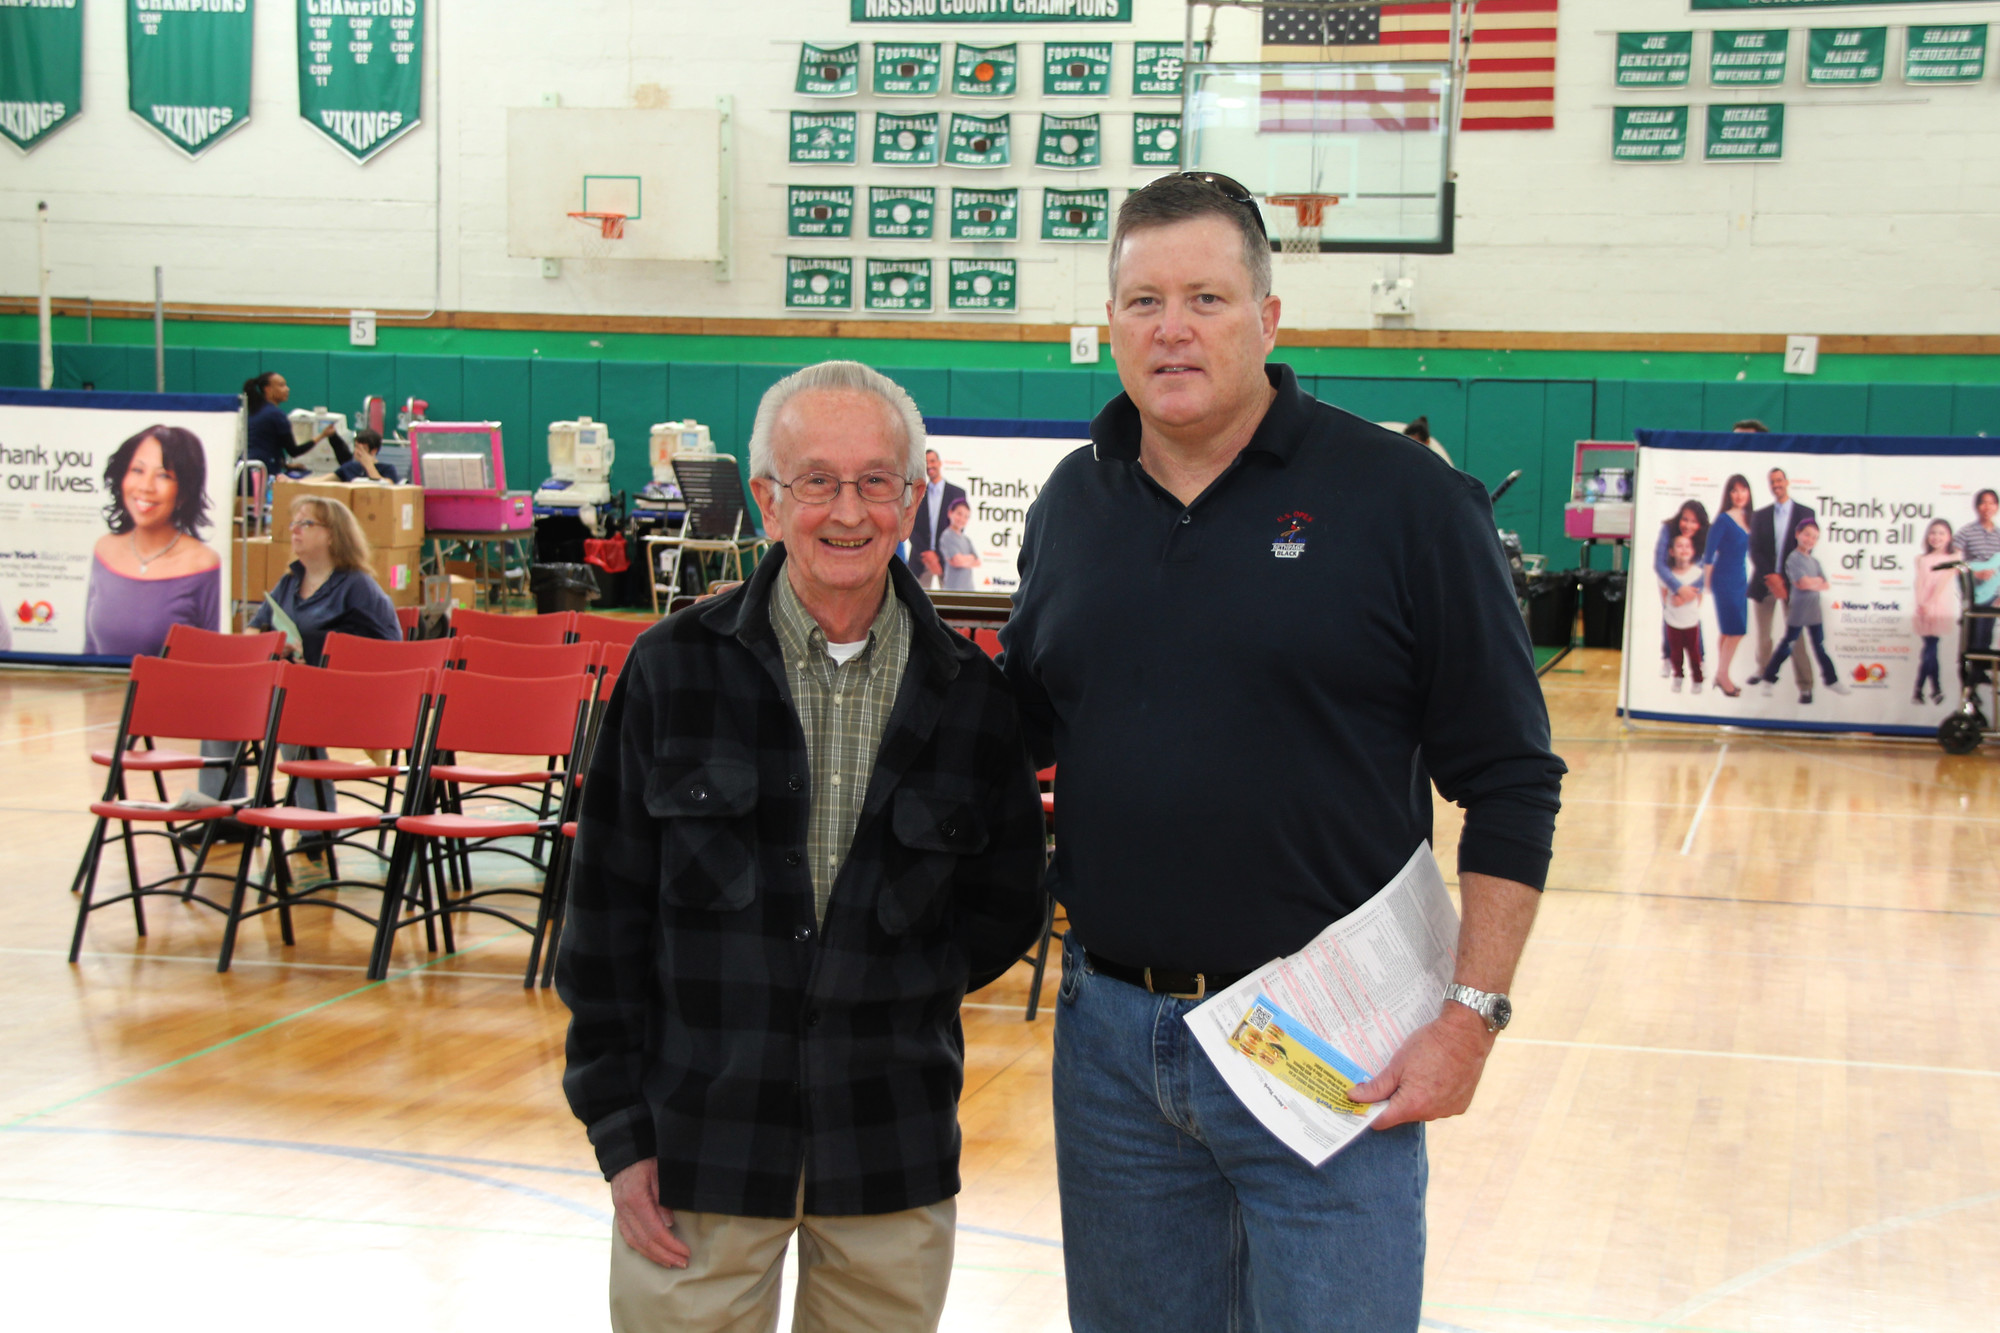 John McDonald with Seaford School District Superintendent Brian Conboy.